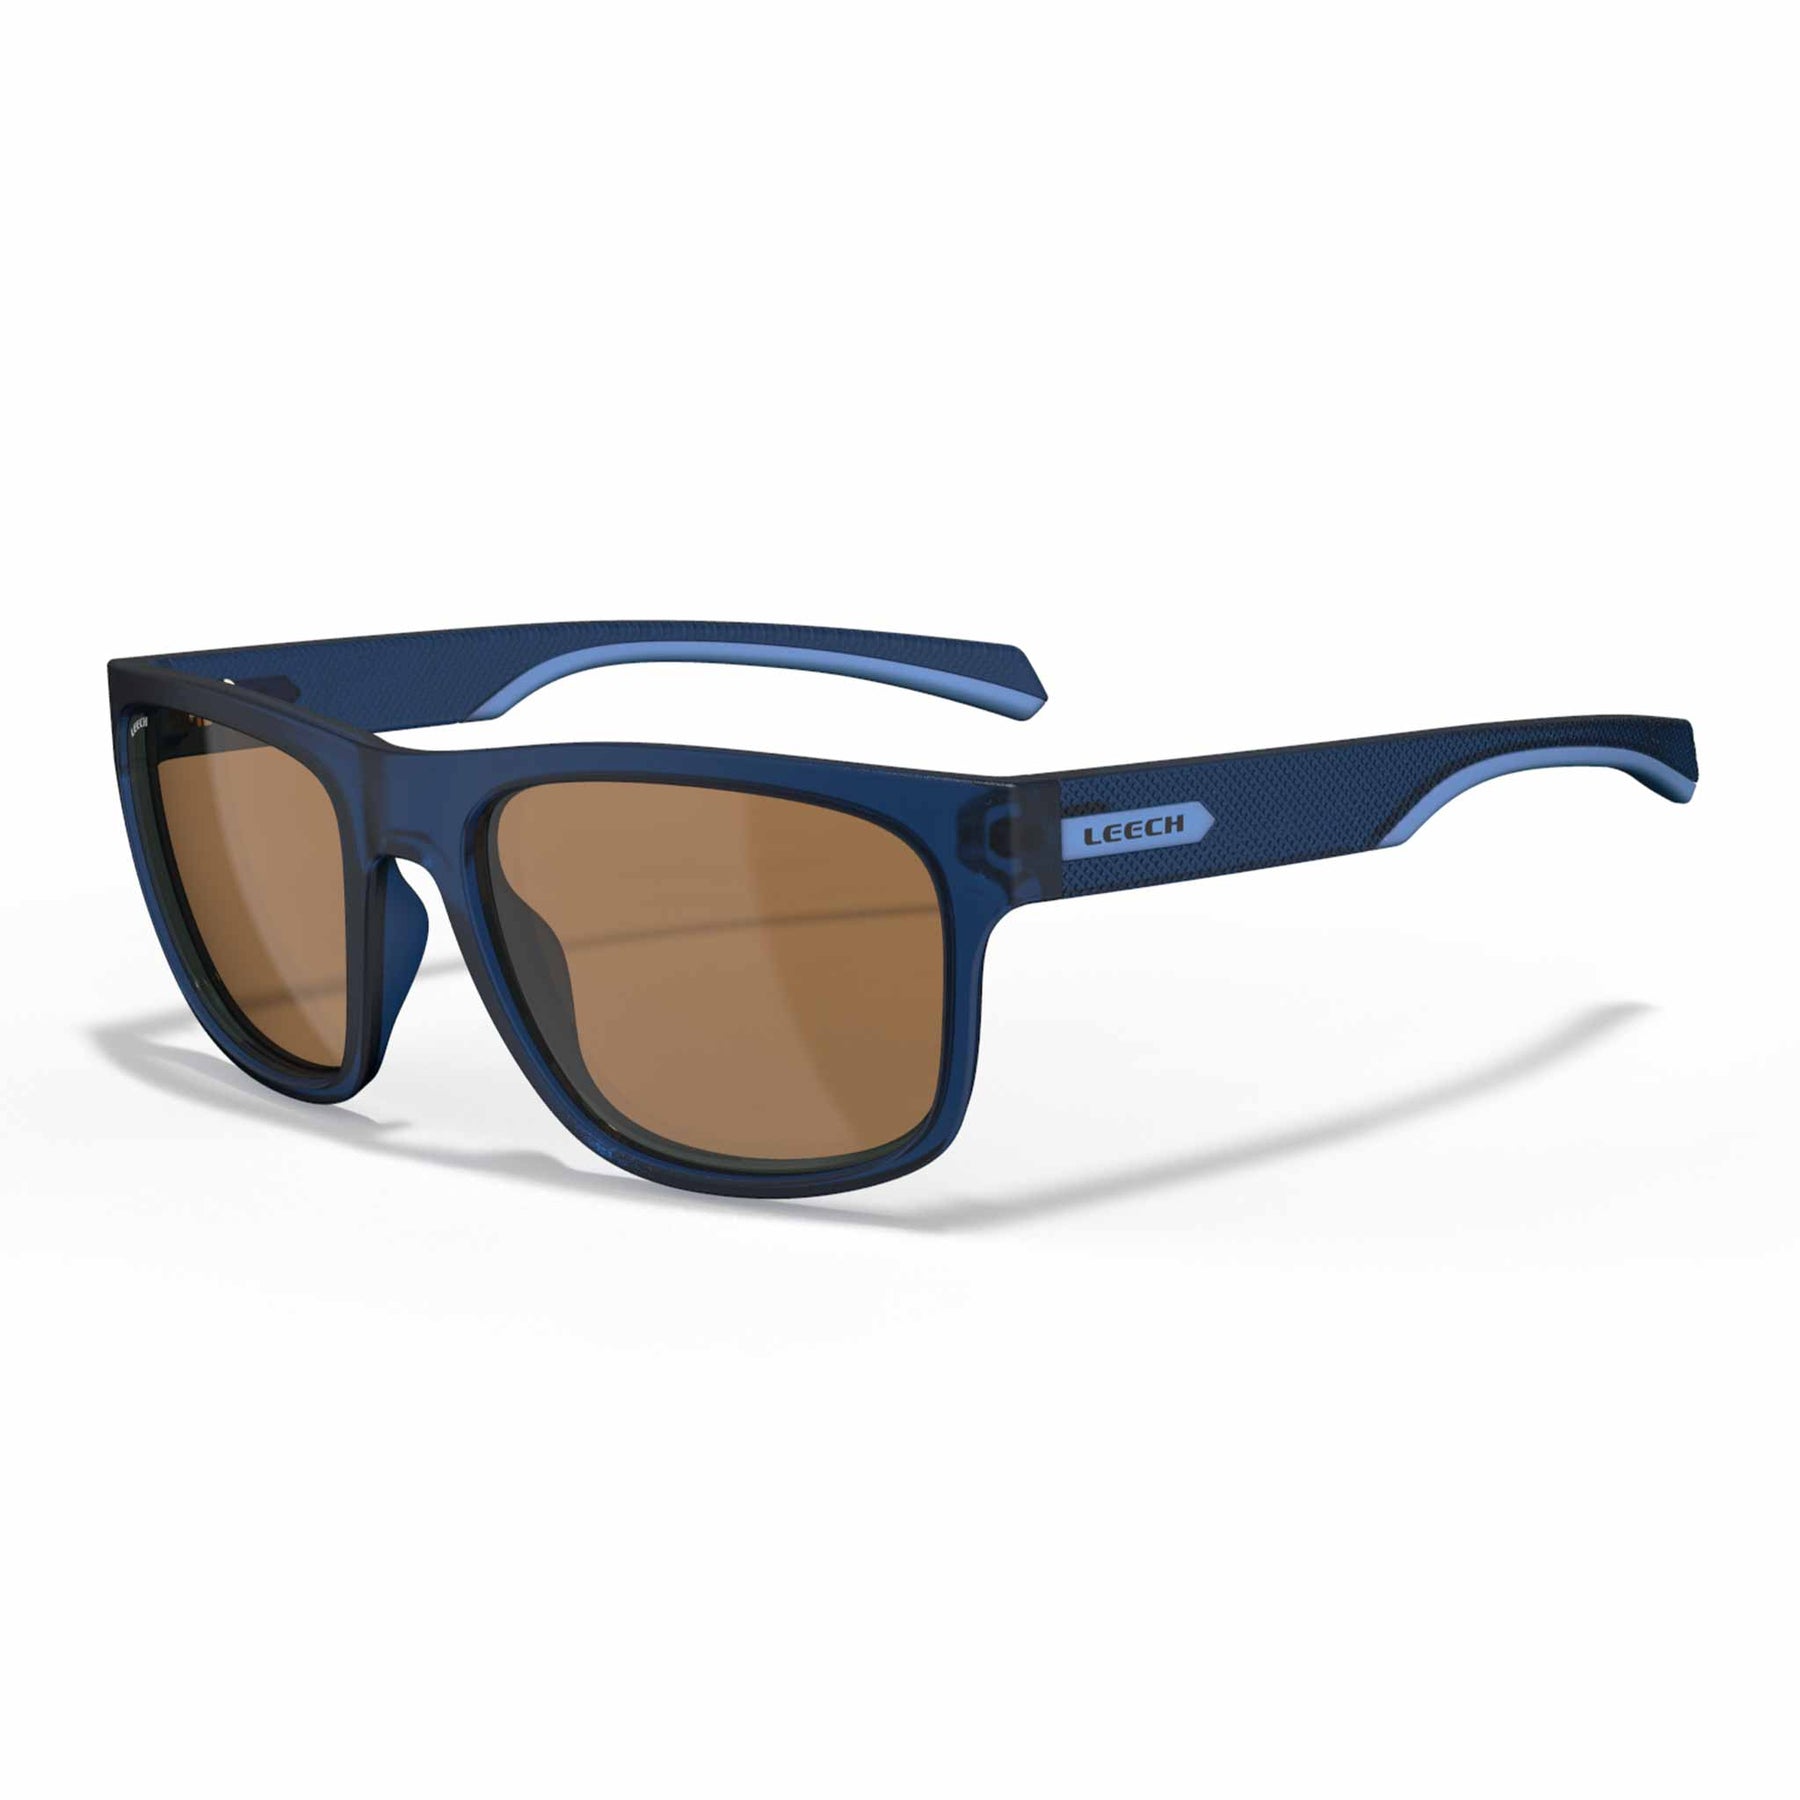 Leech REFLEX Polarized Fishing Sunglasses | Reflex Red